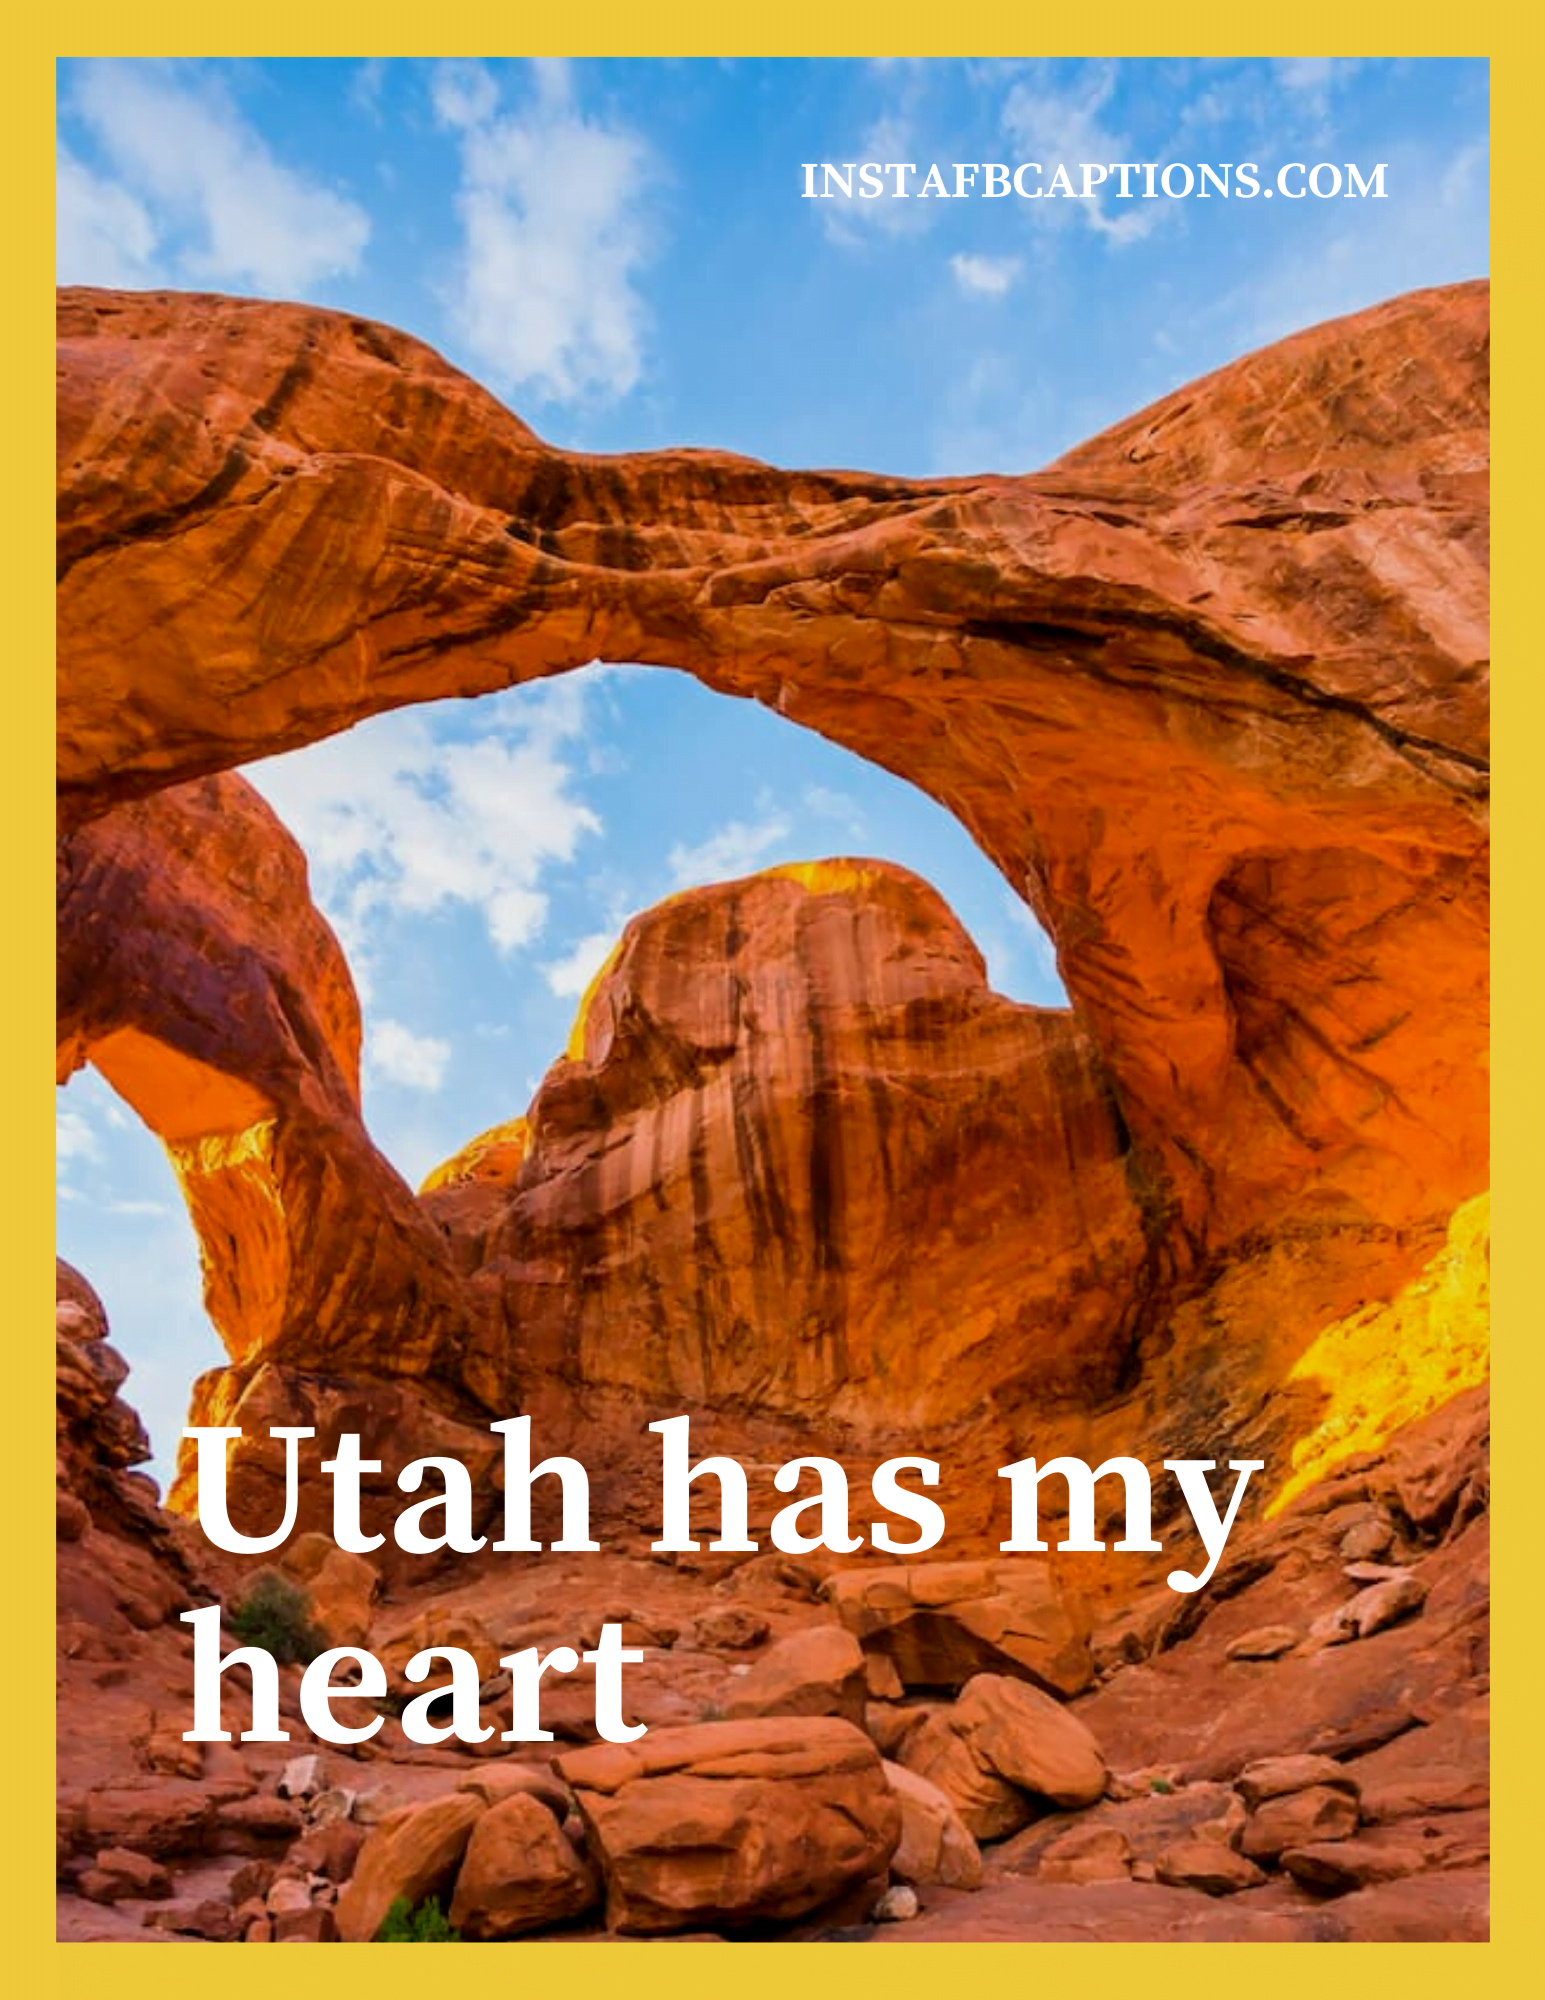 Utah Slogans And Nicknames  - Utah Slogans and Nicknames - Utah Instagram Captions, Quotes, Hashtags 2022